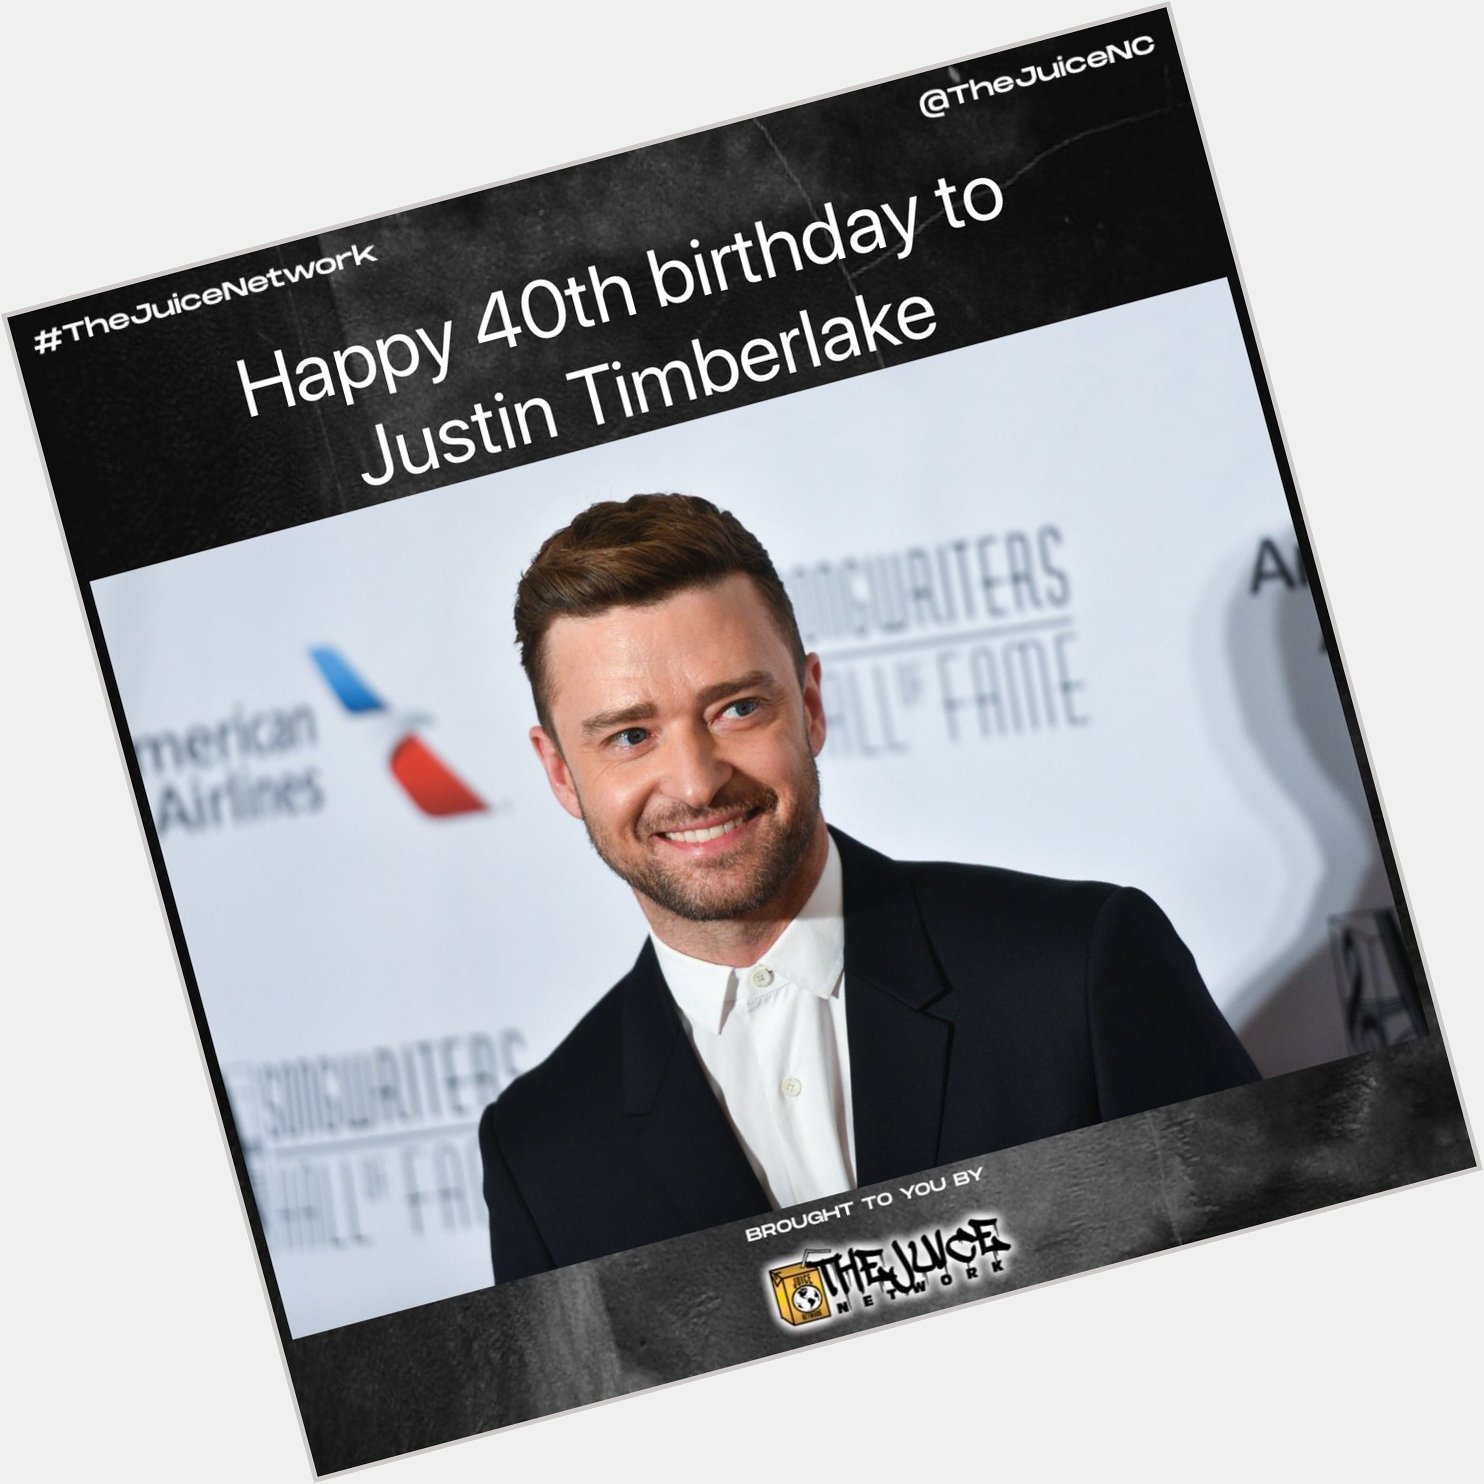 Happy 40th birthday to Justin Timberlake!  